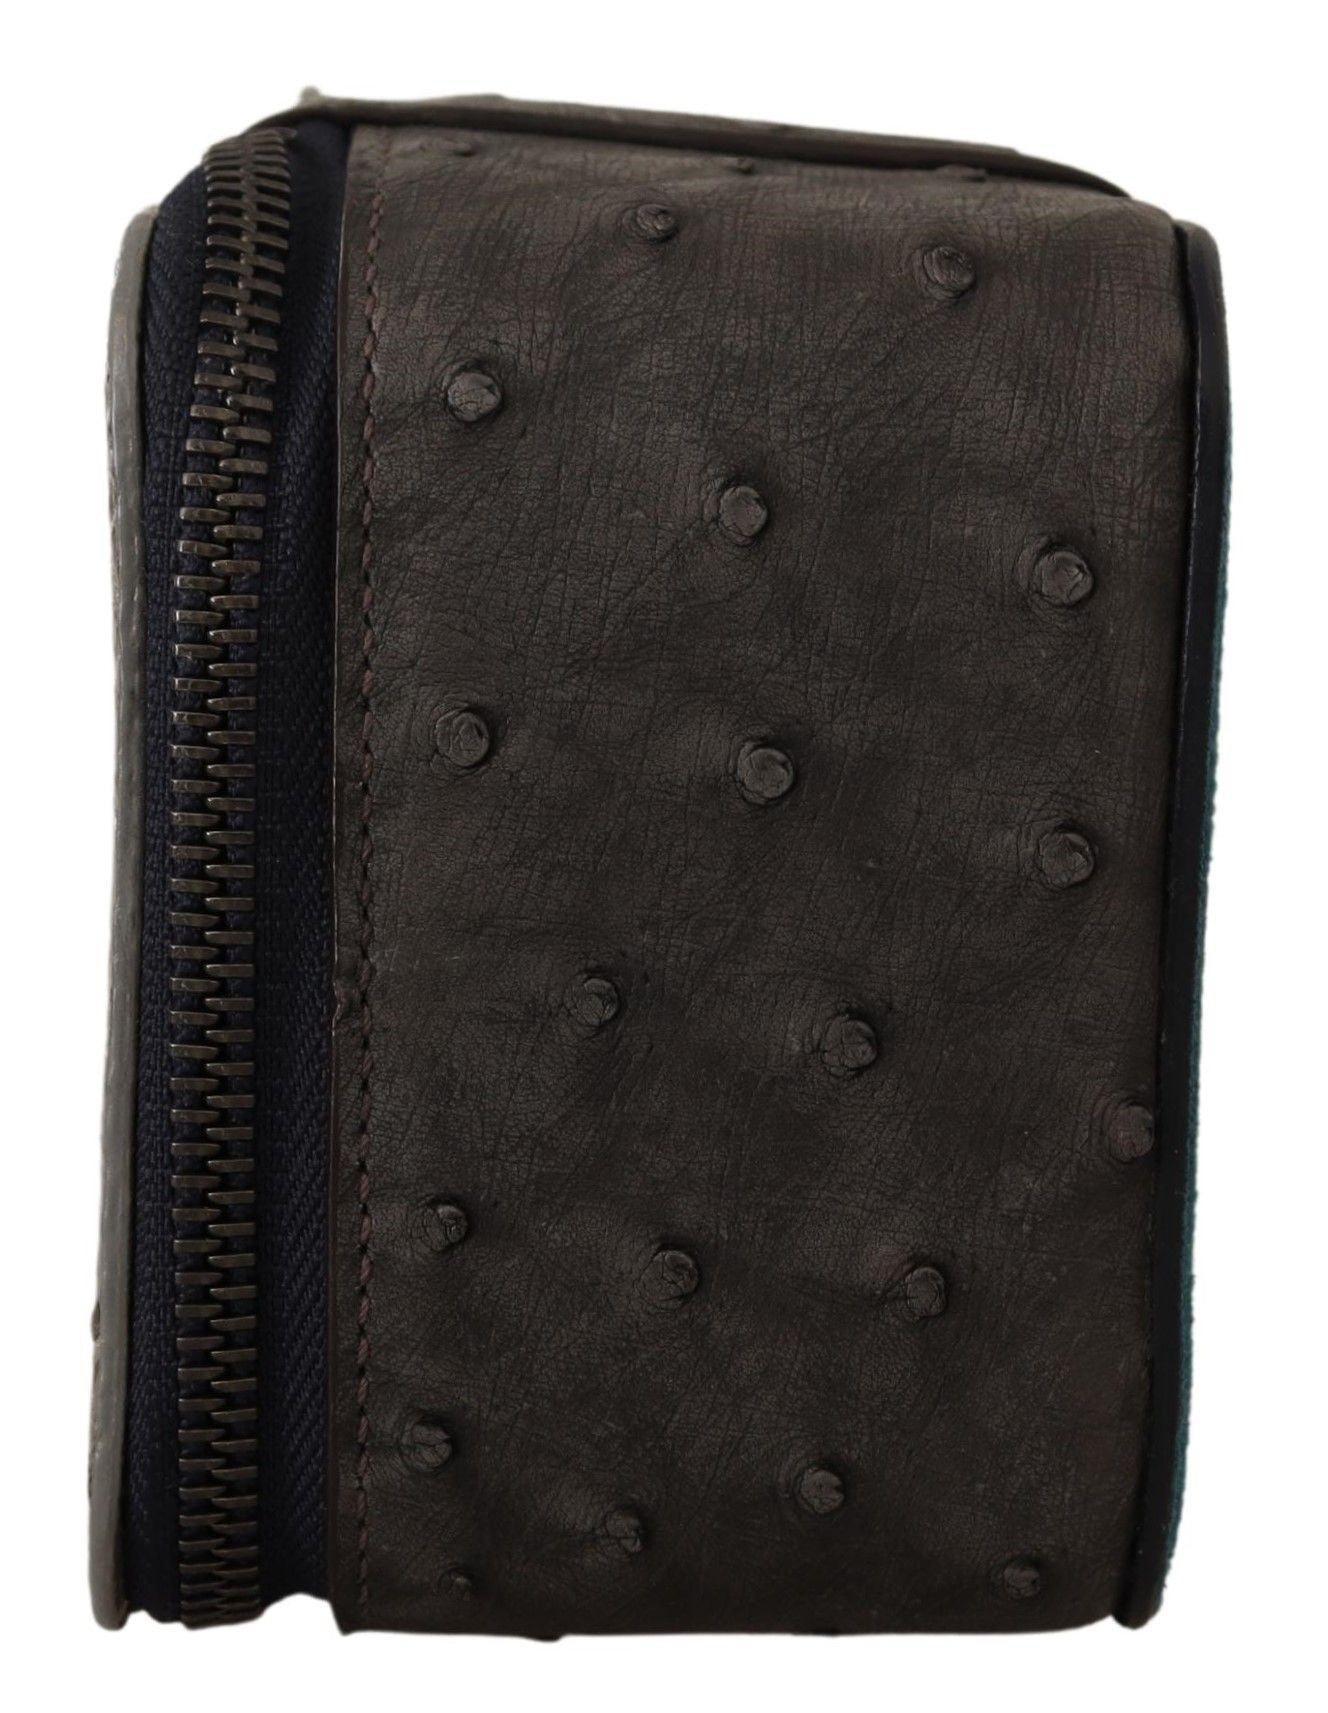 Dolce & Gabbana Gray Skin Leather Vanity Case Toiletry Shaving Bag